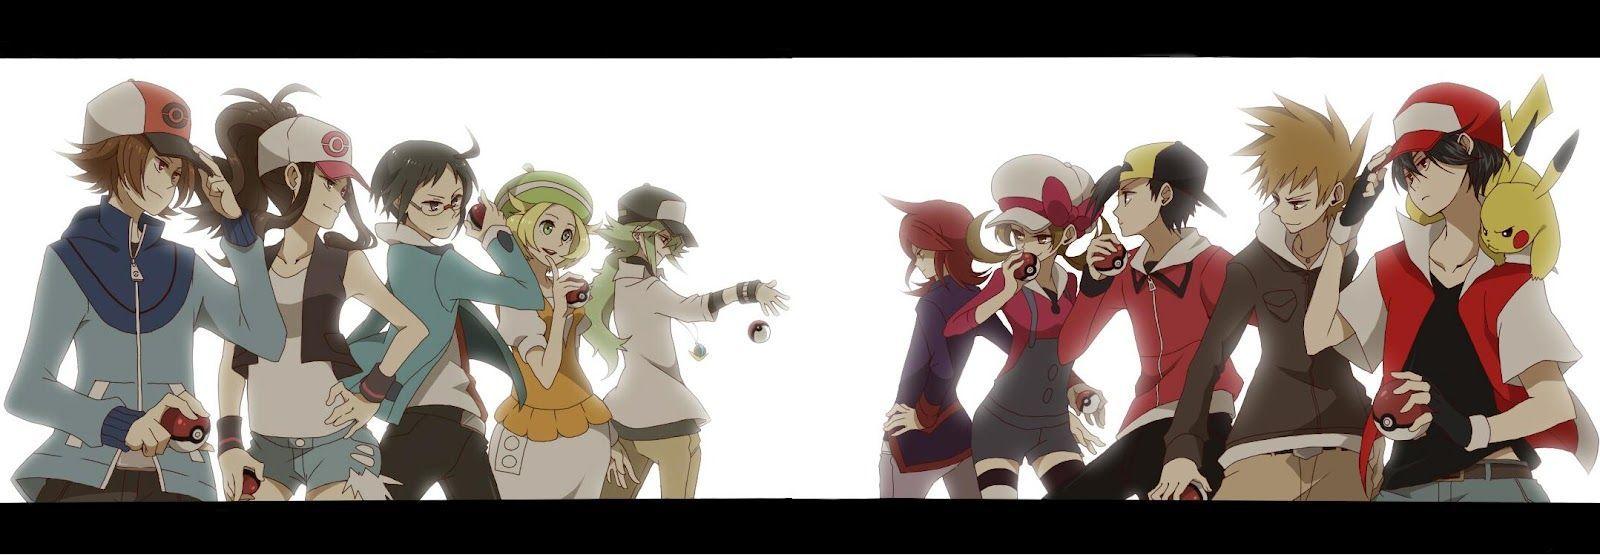 image For > Gold Vs Red Pokemon Adventures. Anime